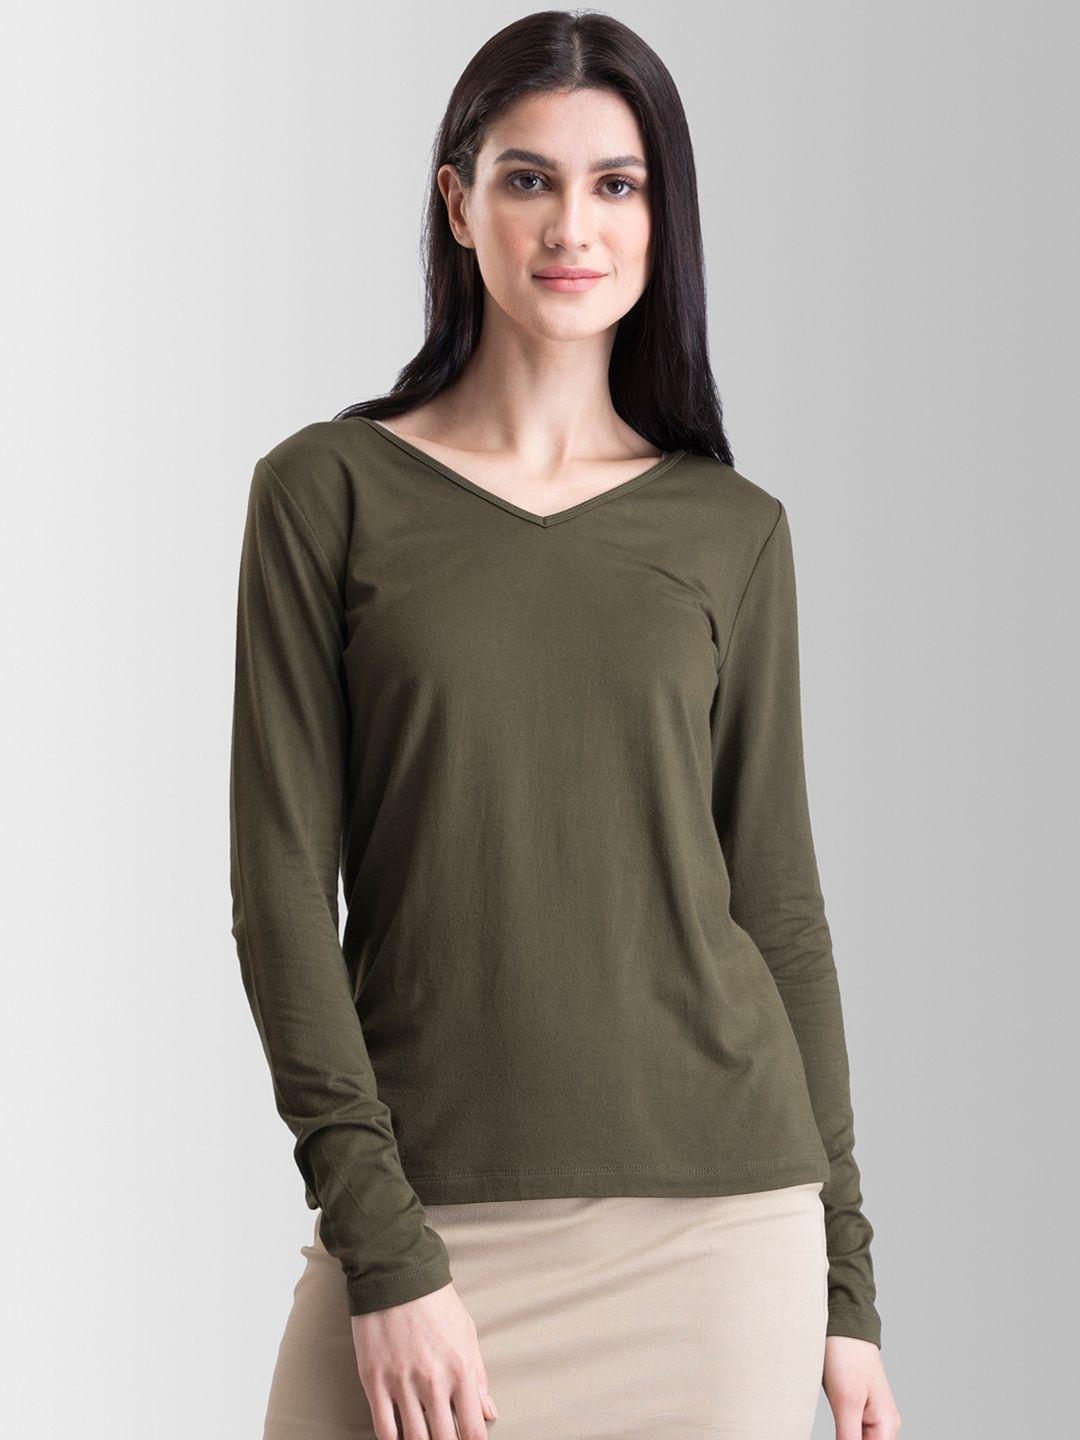 fablestreet women olive green solid v-neck t-shirt